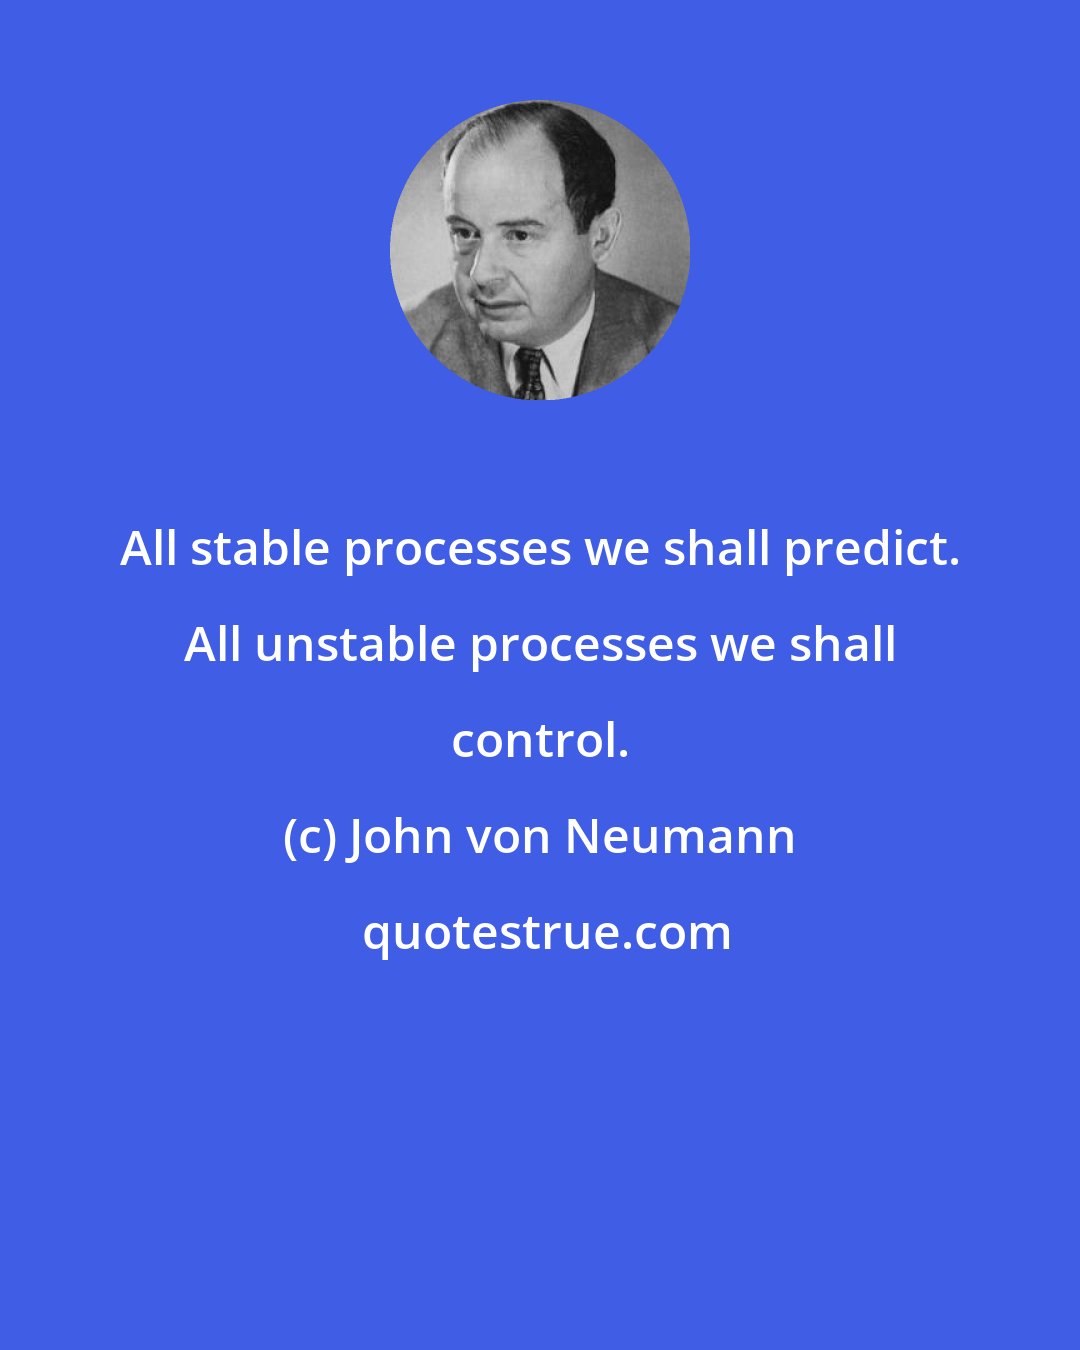 John von Neumann: All stable processes we shall predict. All unstable processes we shall control.